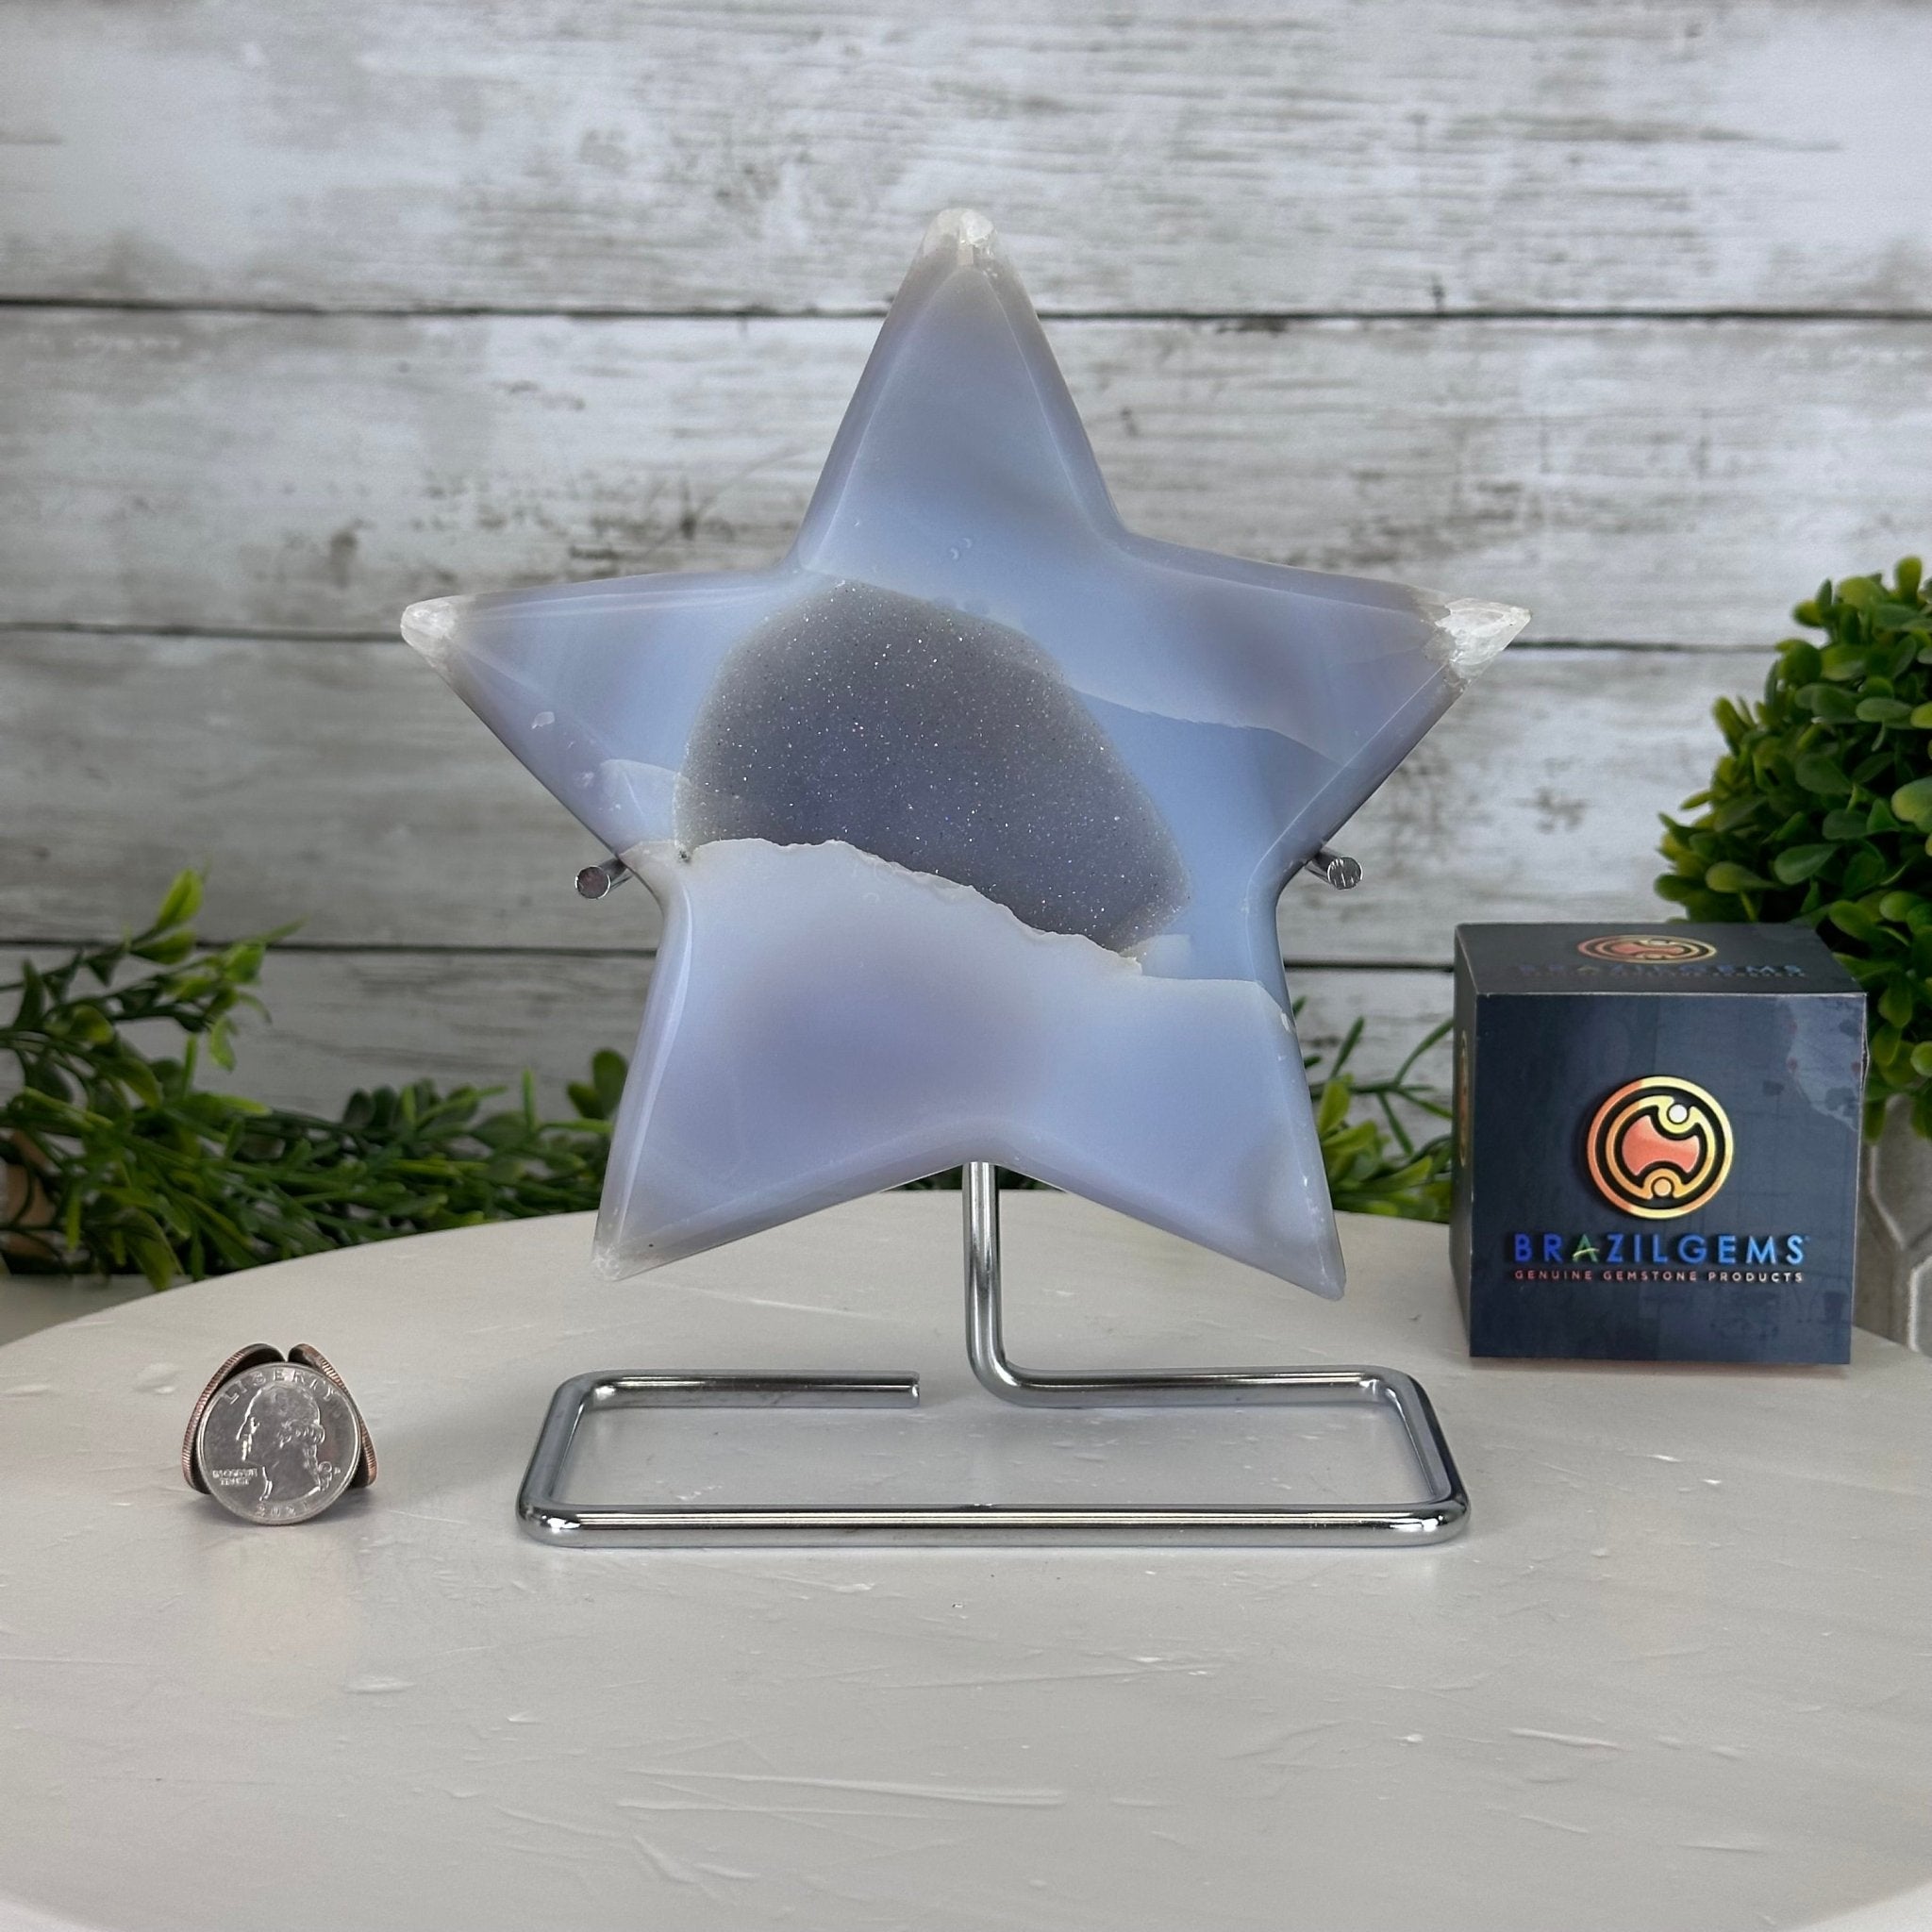 Polished Agate Star on a Metal Stand, 2.9 lbs & 7.7" Tall #5273-0016 - Brazil GemsBrazil GemsPolished Agate Star on a Metal Stand, 2.9 lbs & 7.7" Tall #5273-0016Stars5273-0016